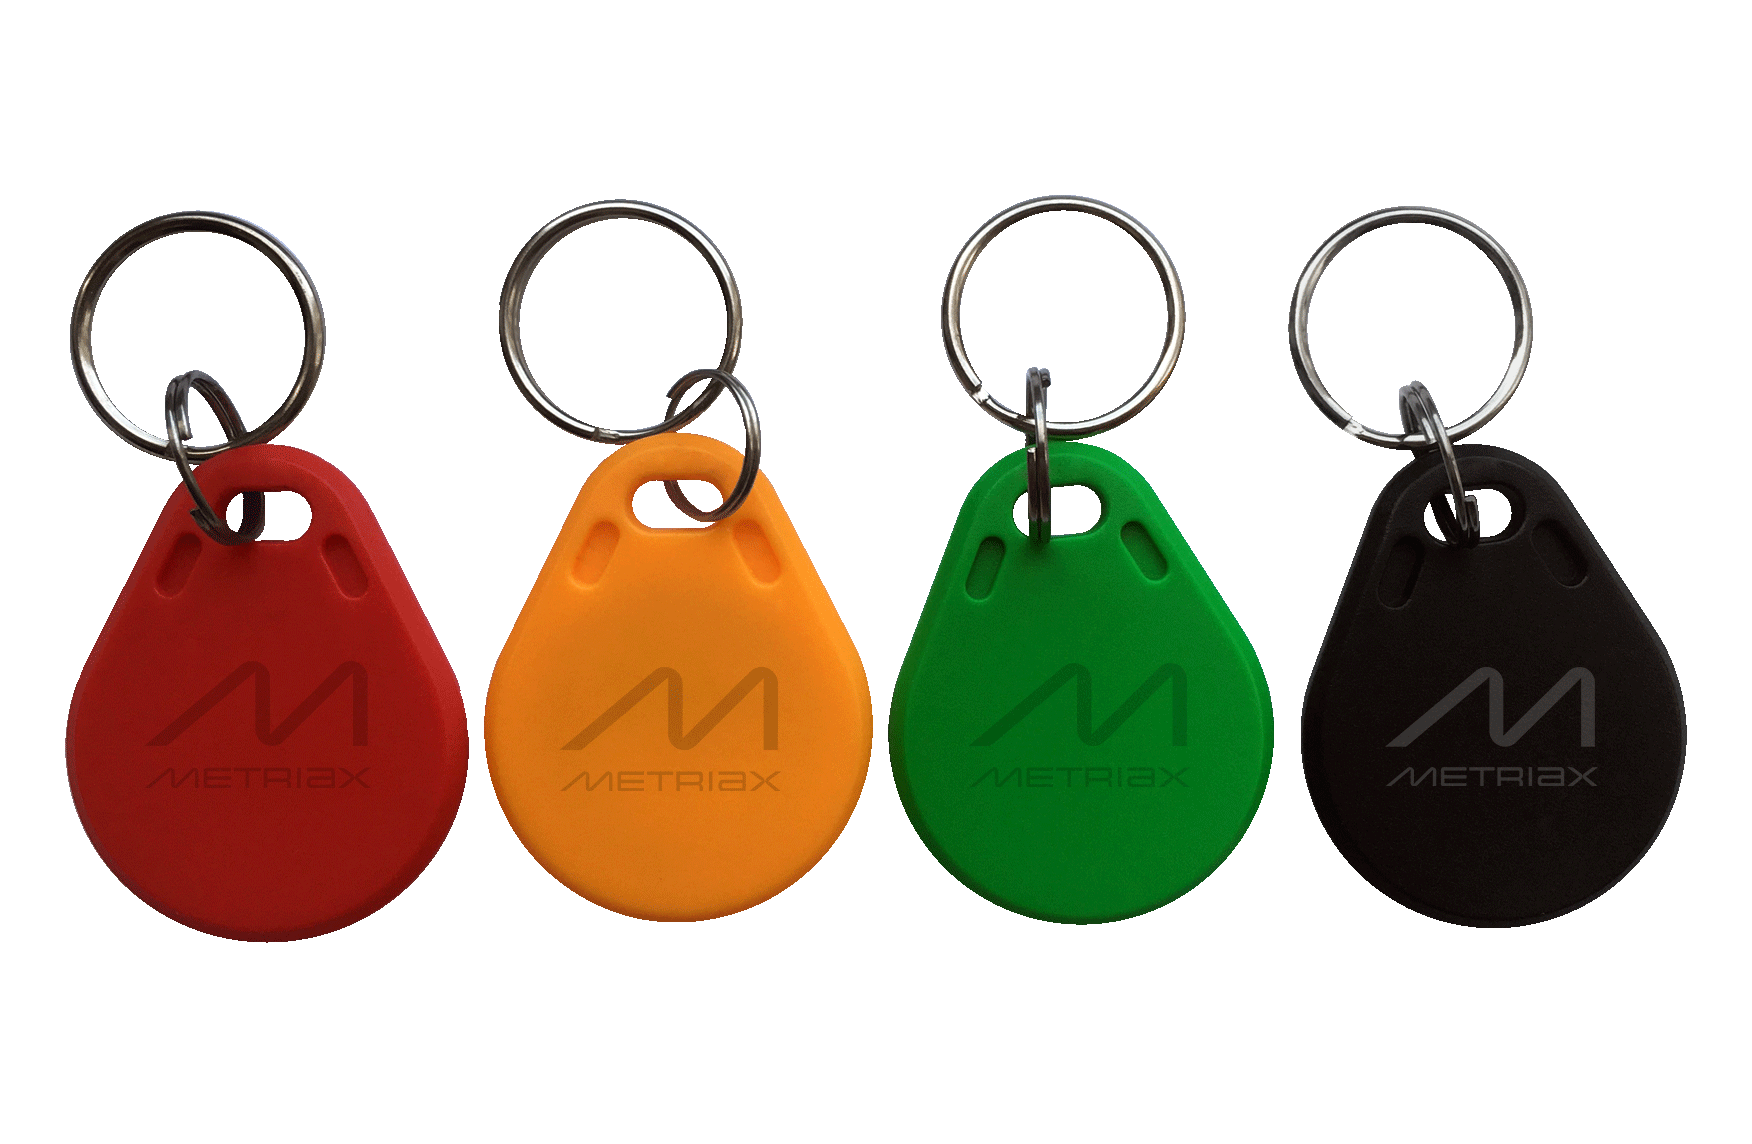 Metriax-RFID-NFC-Schlüsselanhänger-Keyfobs-individuell bedruckbar-individualisiert-ISO 14443-ISO 15693-AES 128-HF-LF-ABS-Schlüsselanhänger